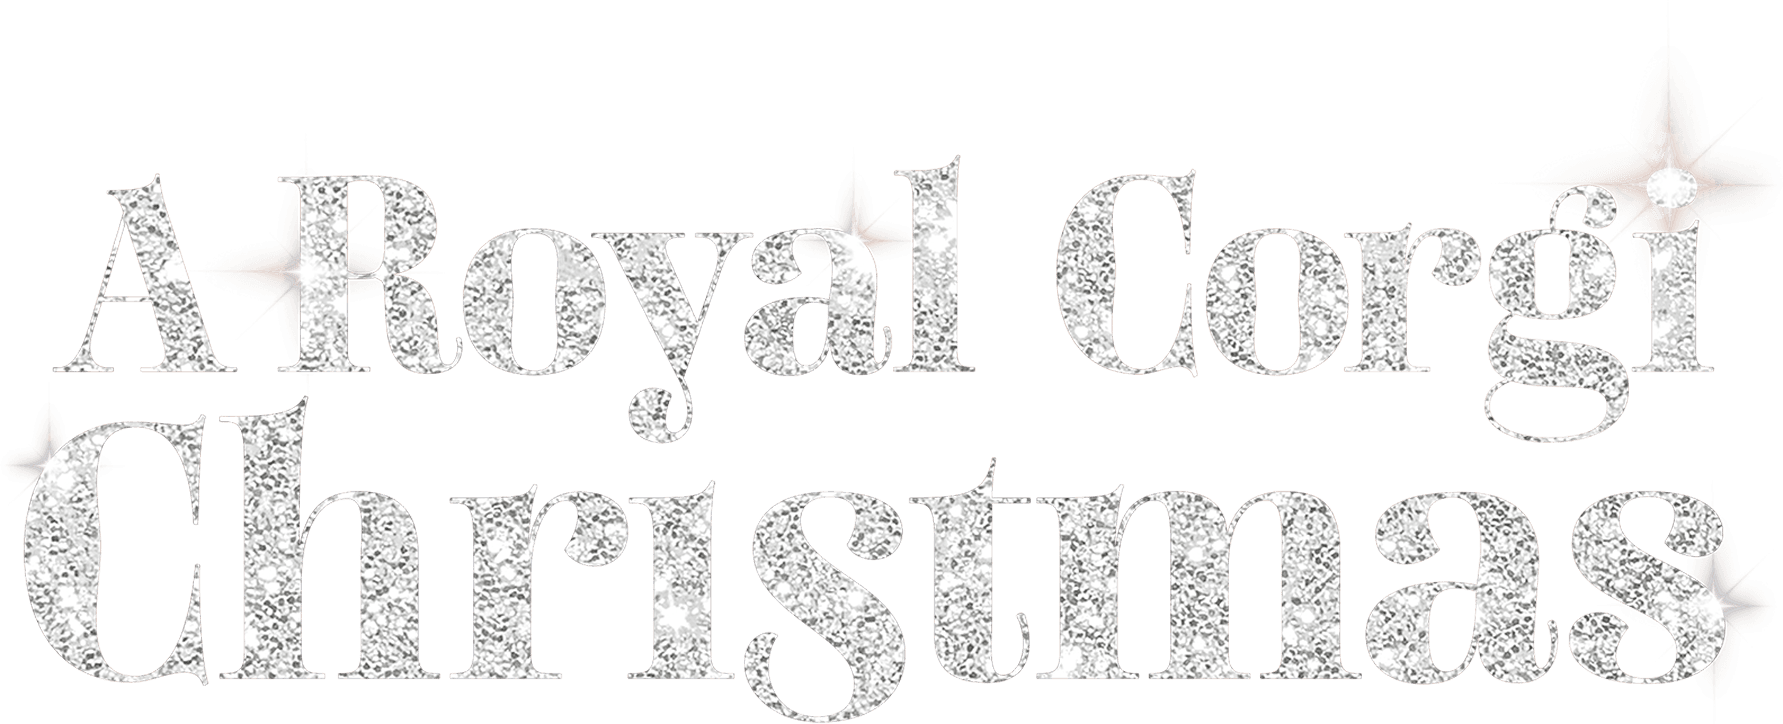 A Royal Corgi Christmas logo